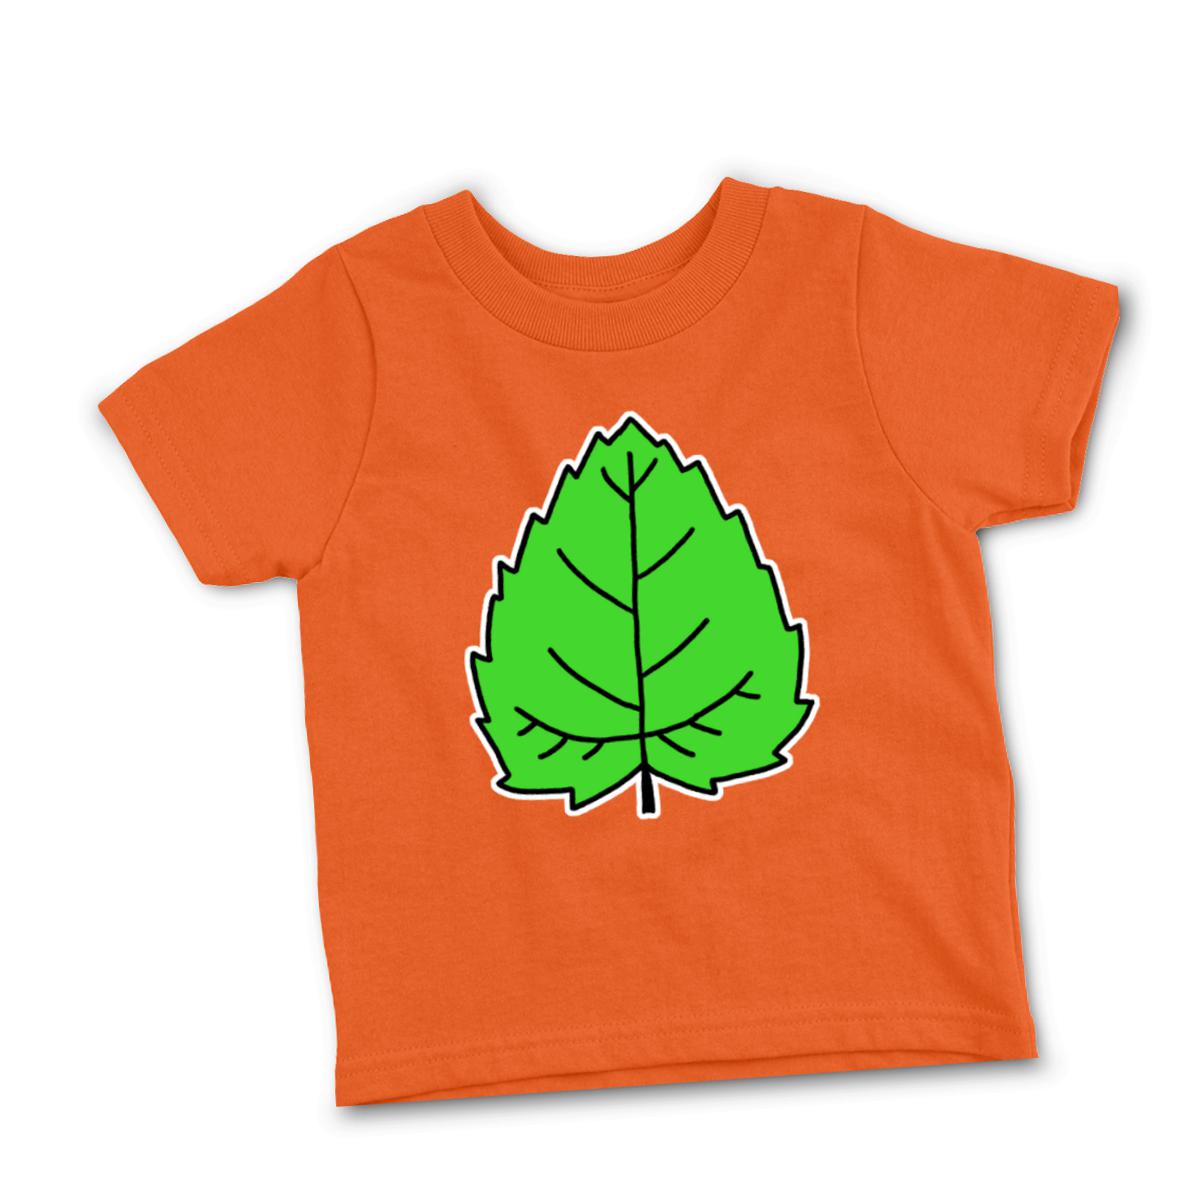 Mulberry Leaf Toddler Tee 56T orange